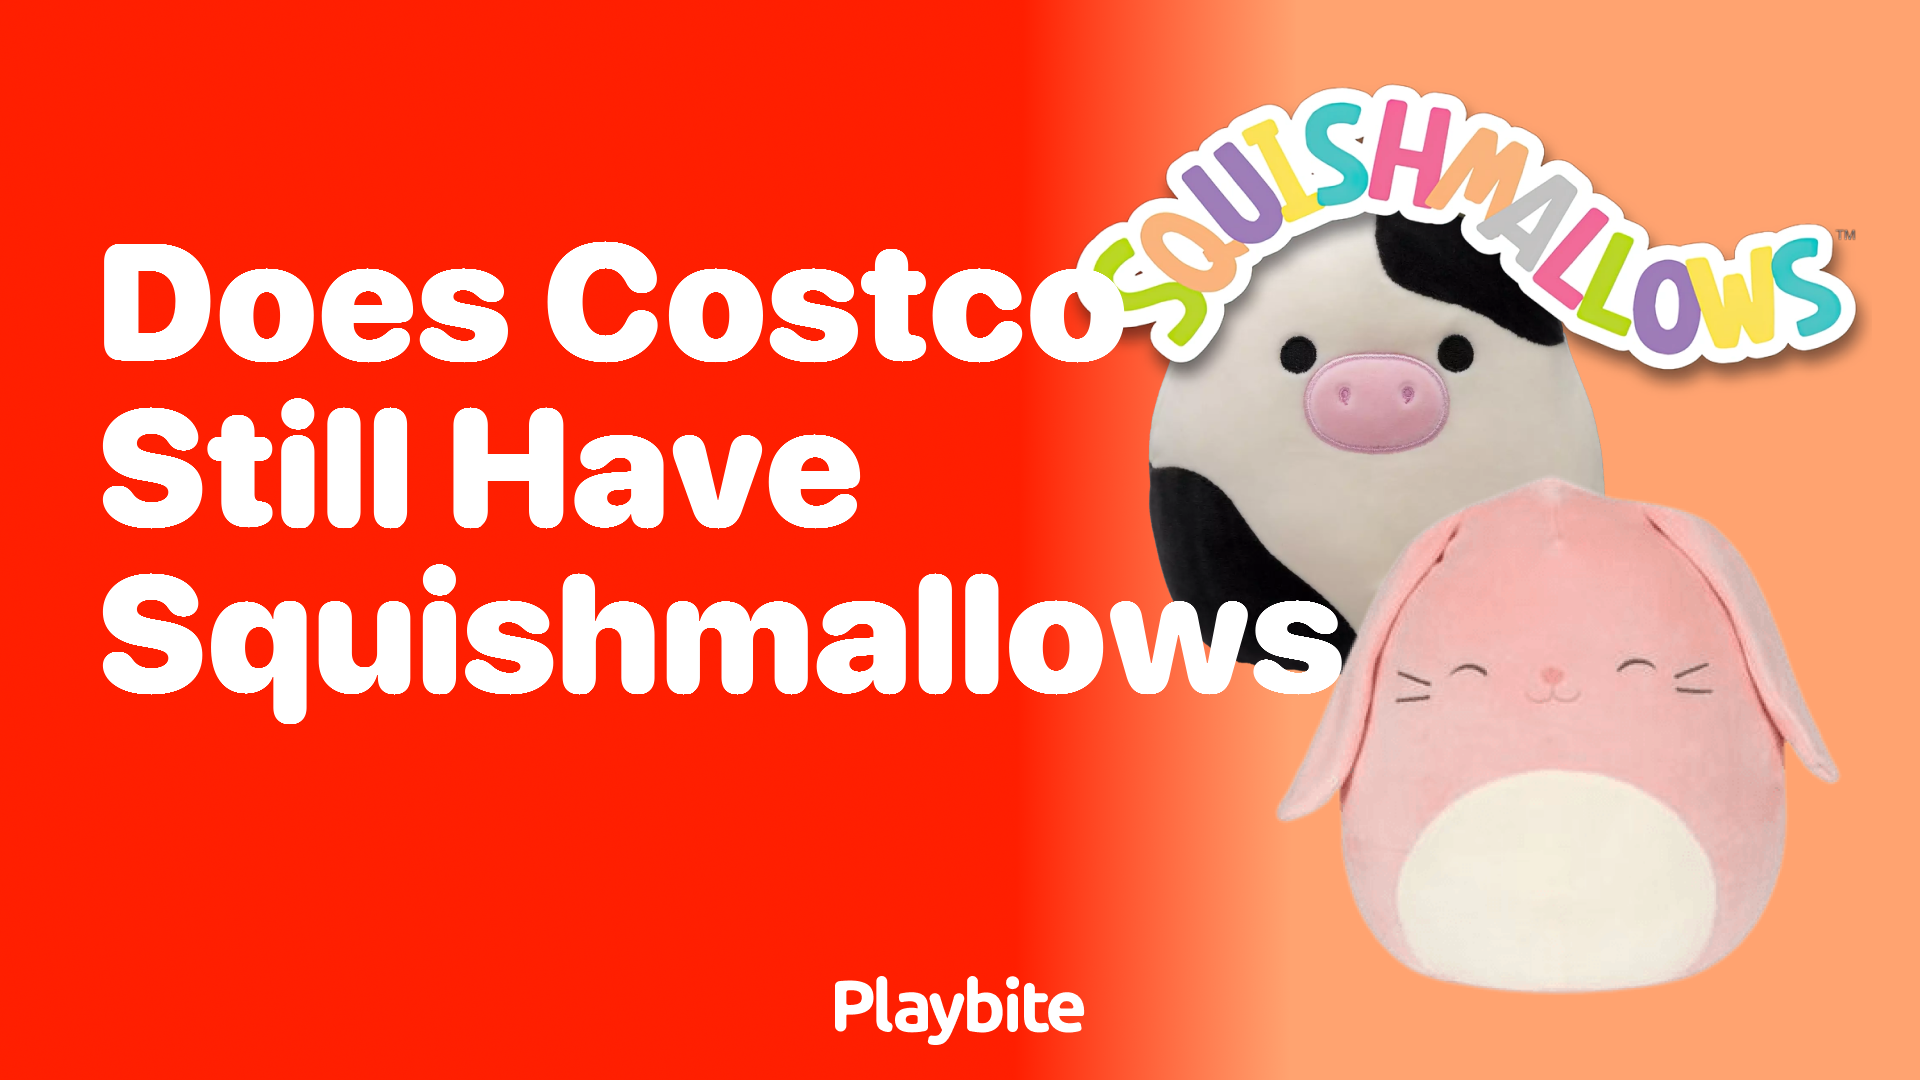 Does Costco Still Have Squishmallows?